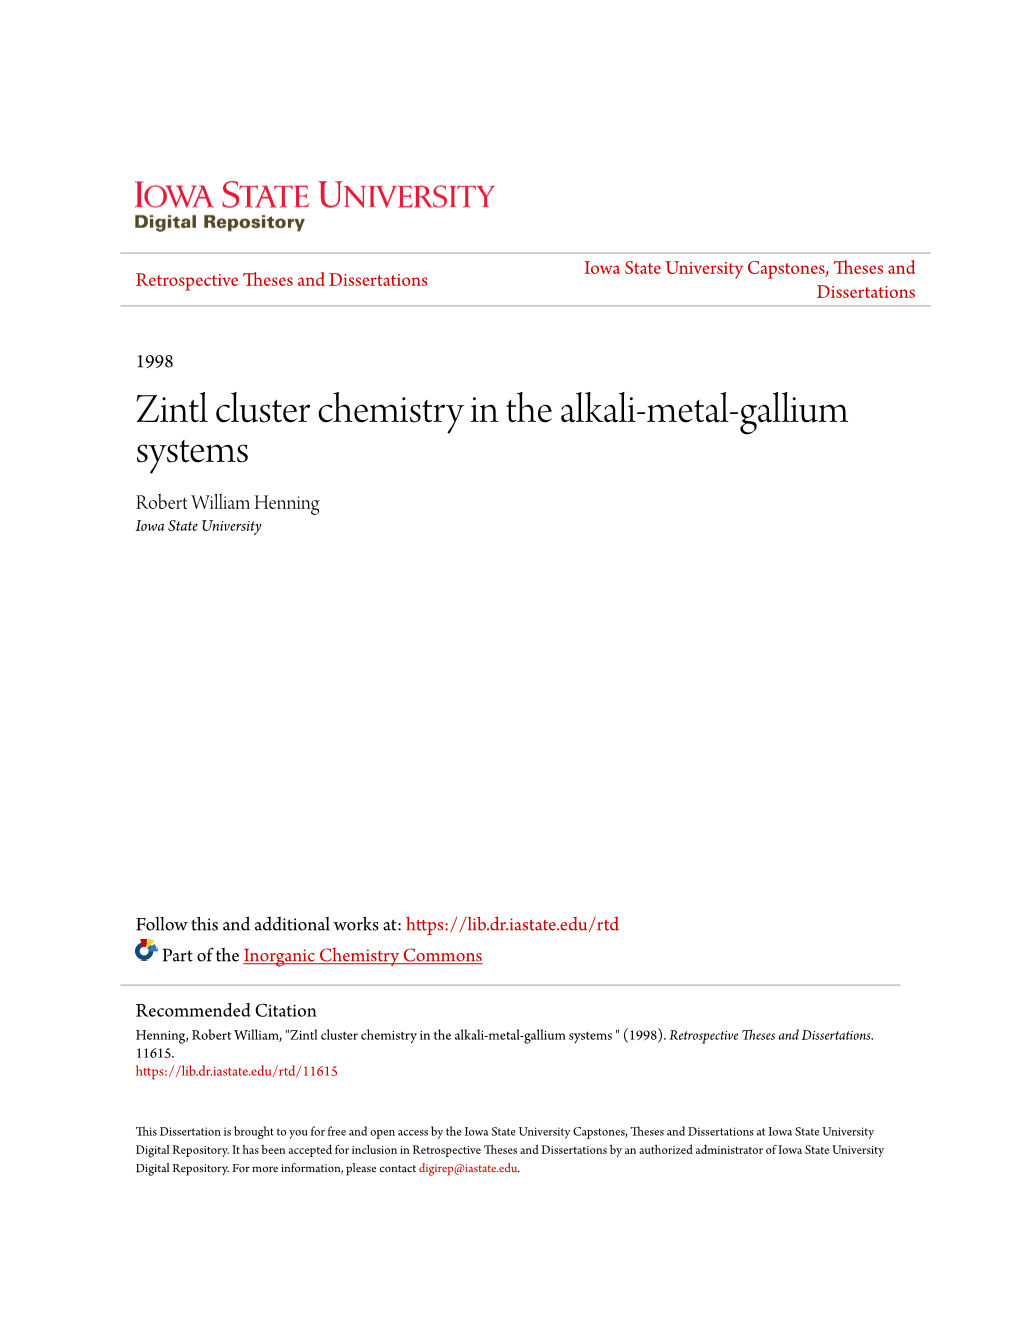 Zintl Cluster Chemistry in the Alkali-Metal-Gallium Systems Robert William Henning Iowa State University